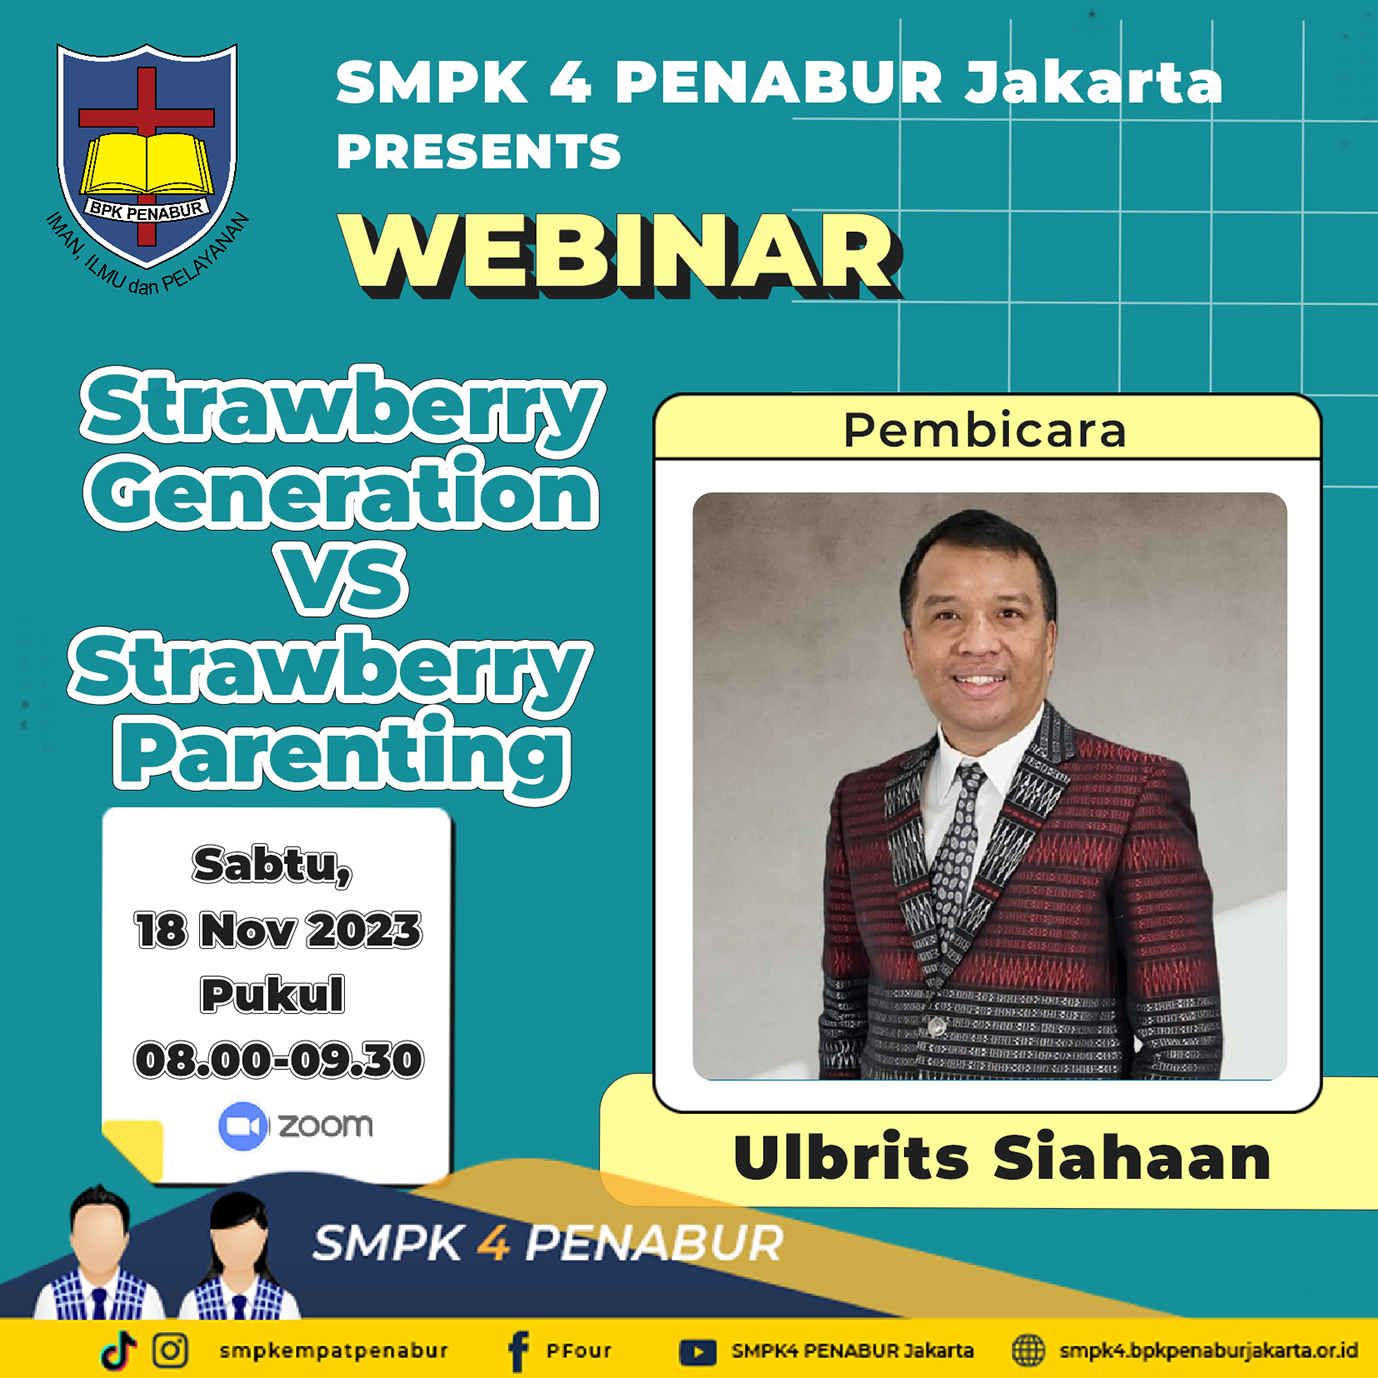 Webinar : "Strawberry Generation vs Strawberry Parenting"